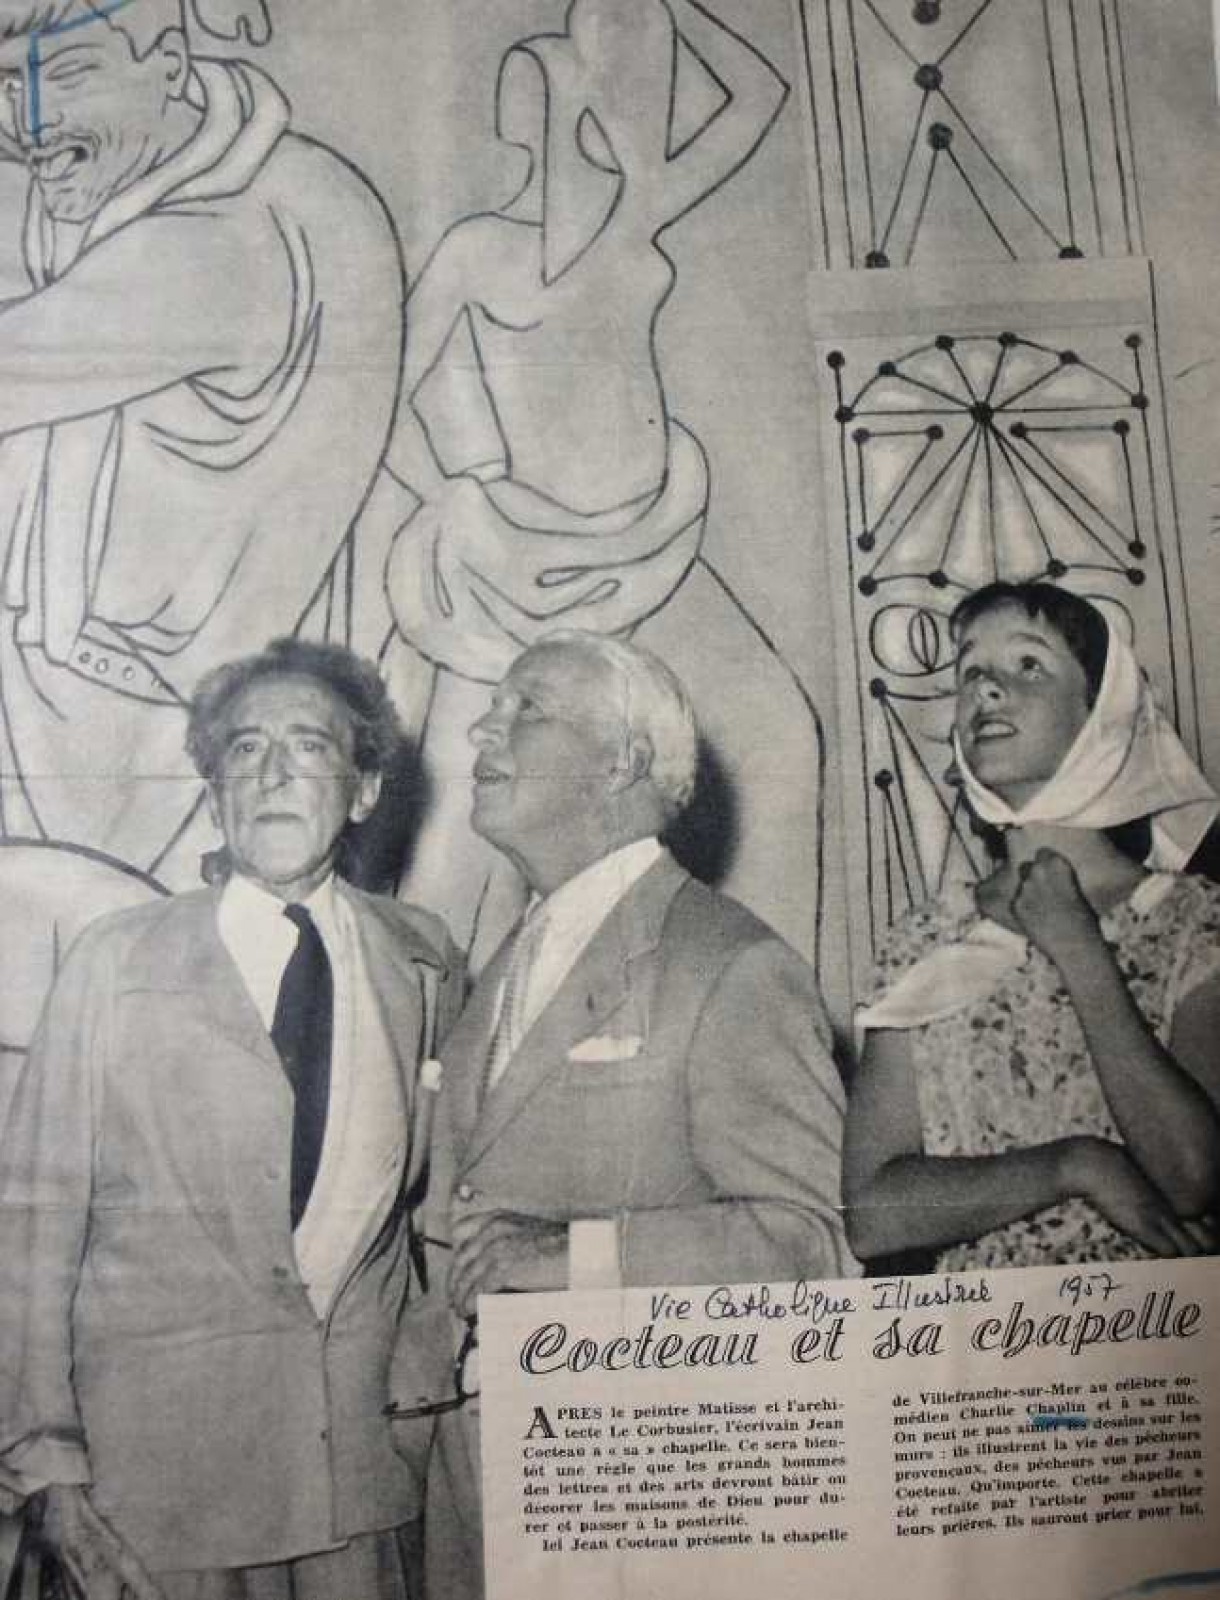 Cocteau et sa chapelle, 1957